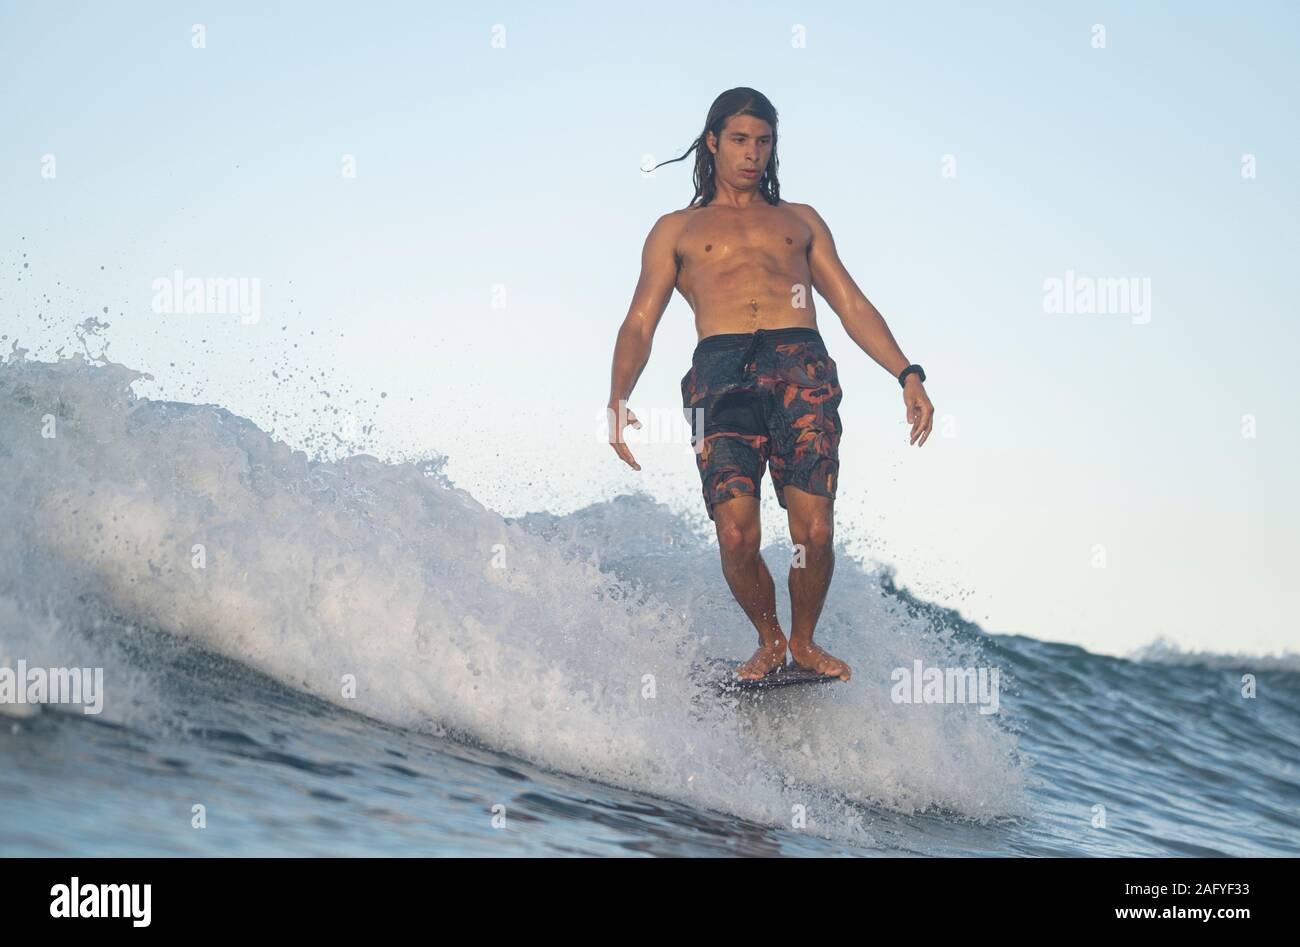 Surfing the sunrise in Costa Rica Stock Photo